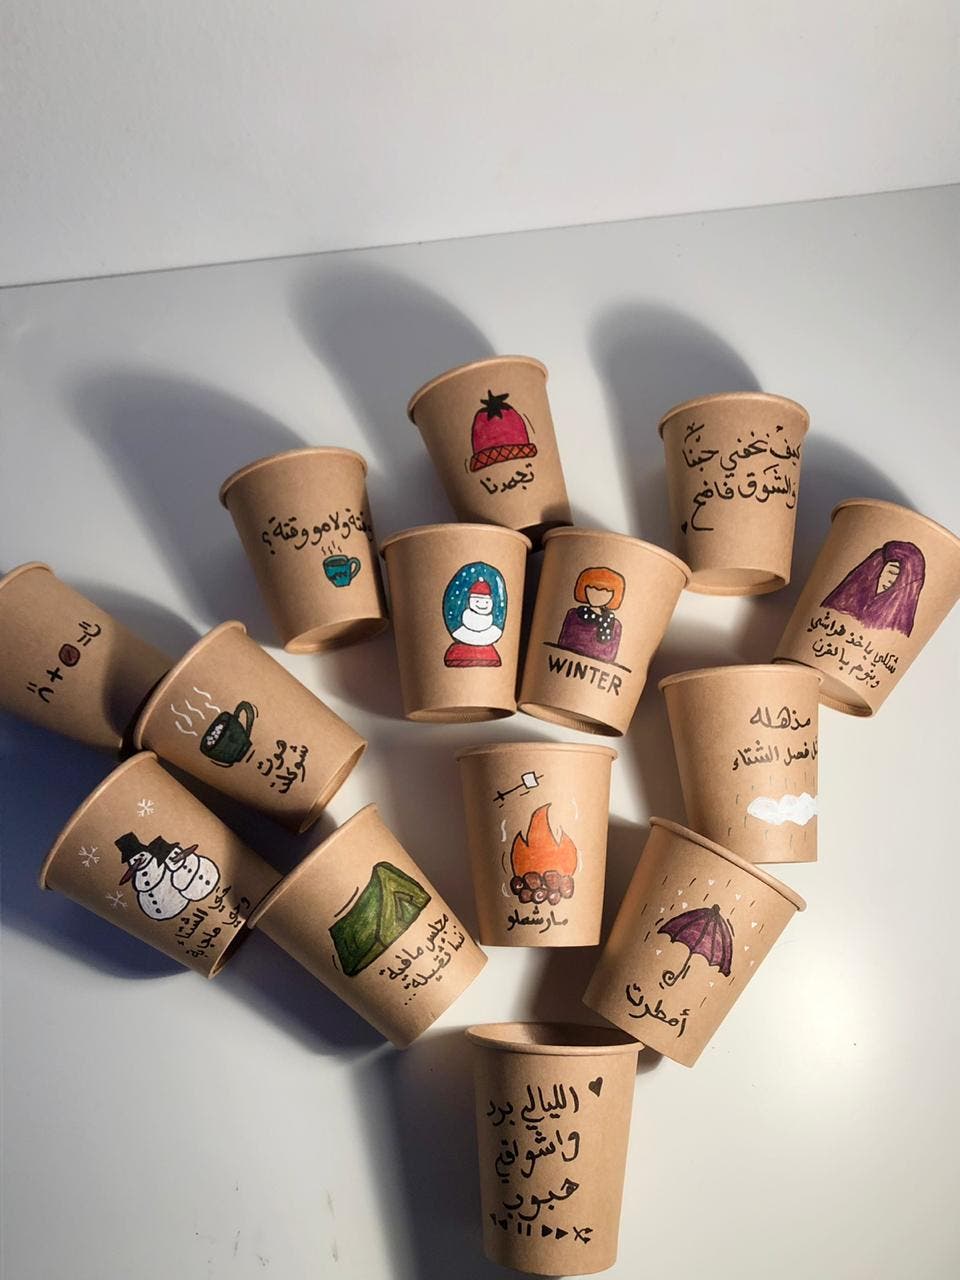 KSA: Saudi Artist samples